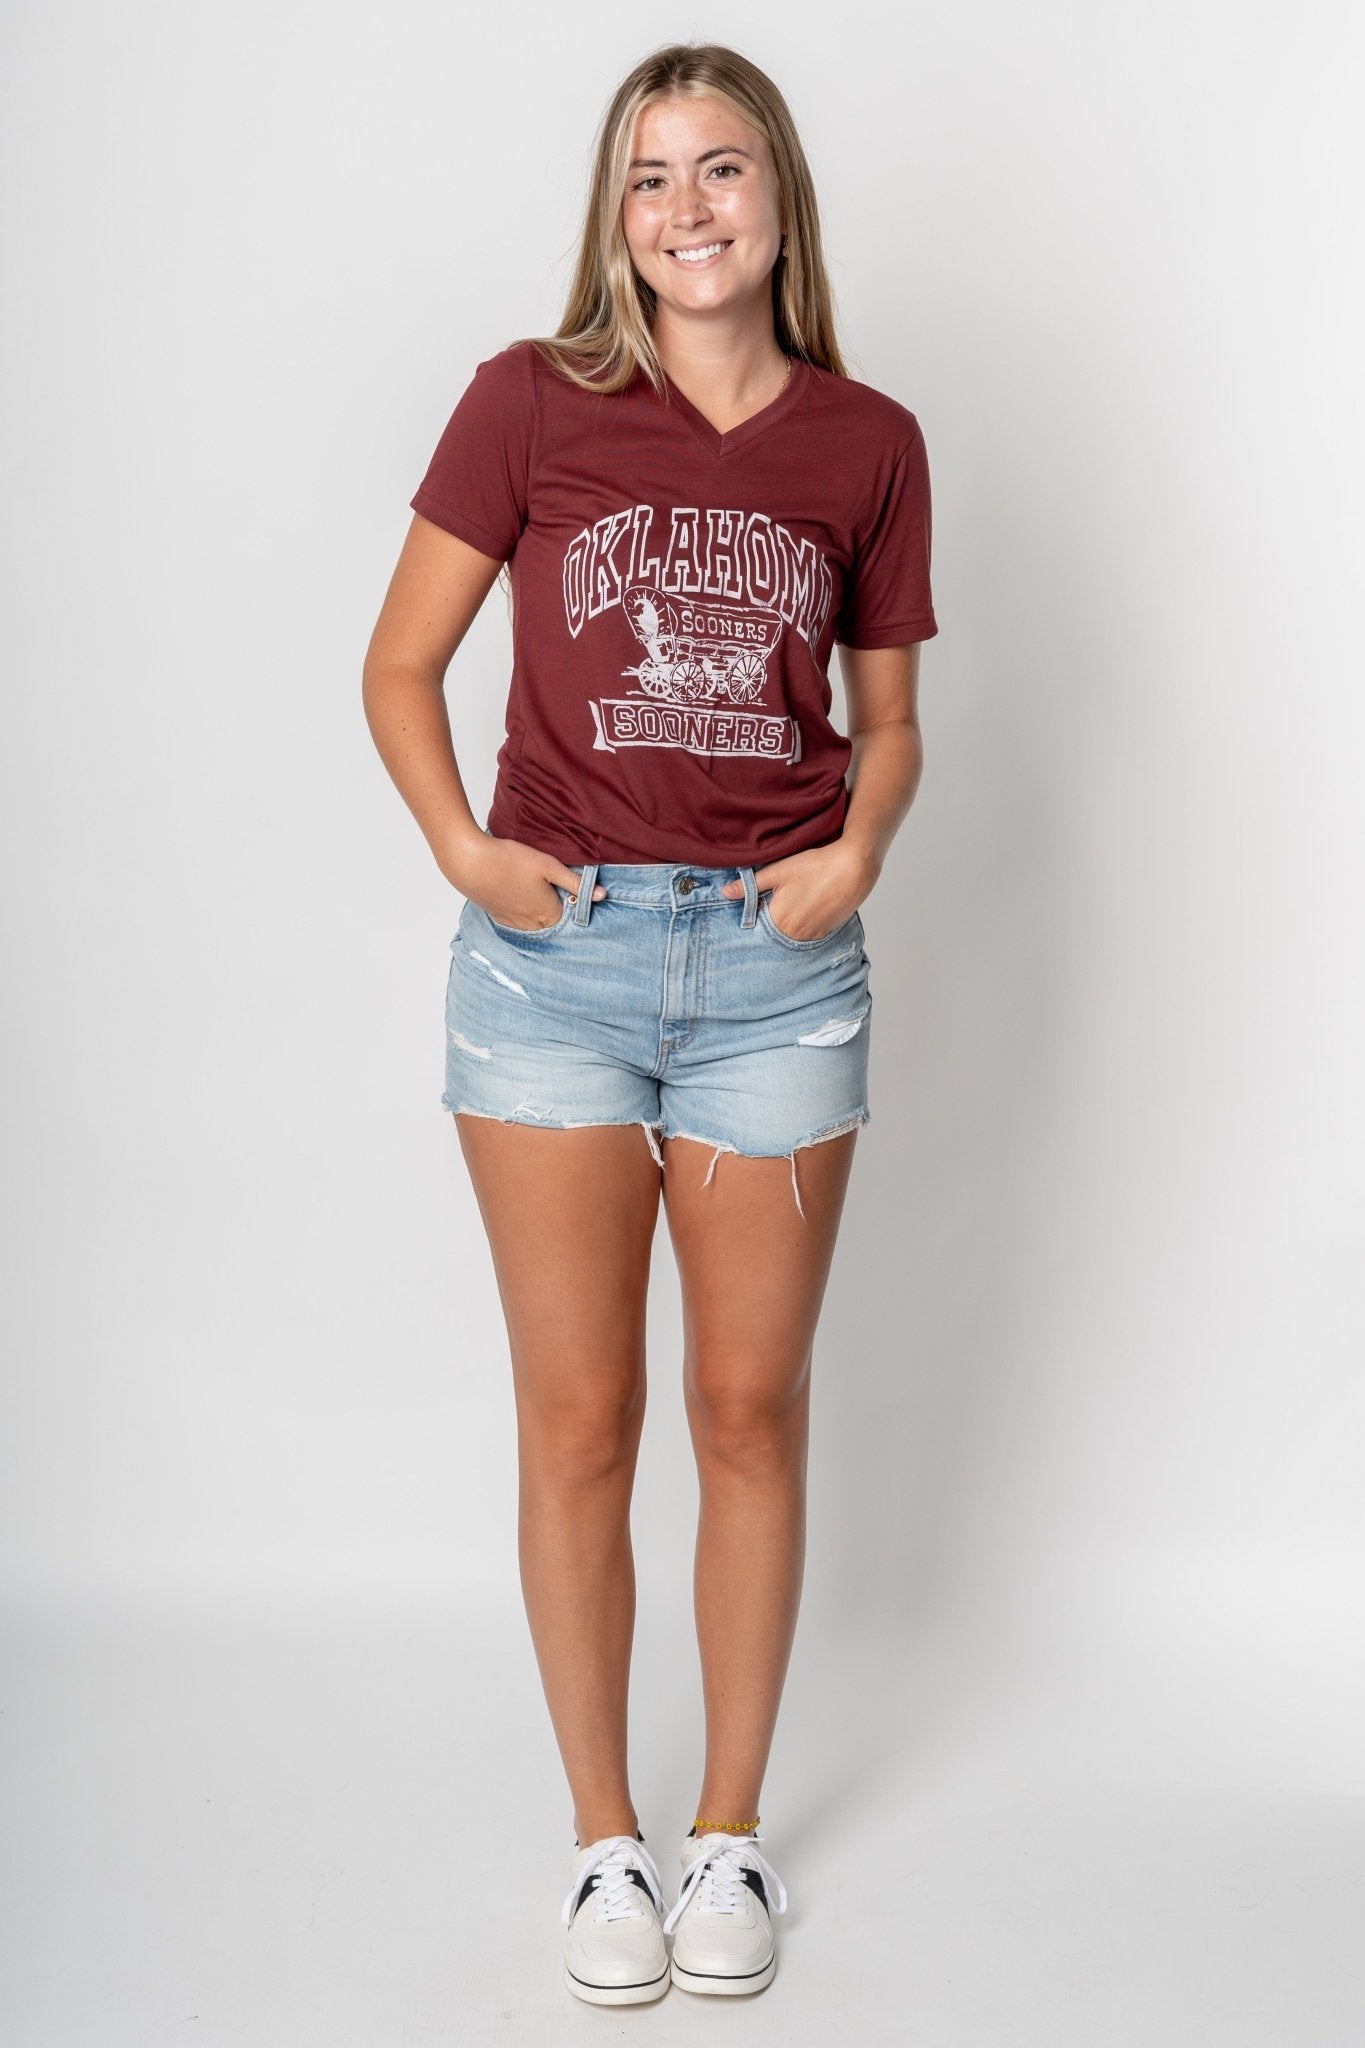 OU OU arch schooner unisex v-neck t-shirt crimson t-shirt | Lush Fashion Lounge Trendy Oklahoma University Sooners Apparel & Cute Gameday T-Shirts